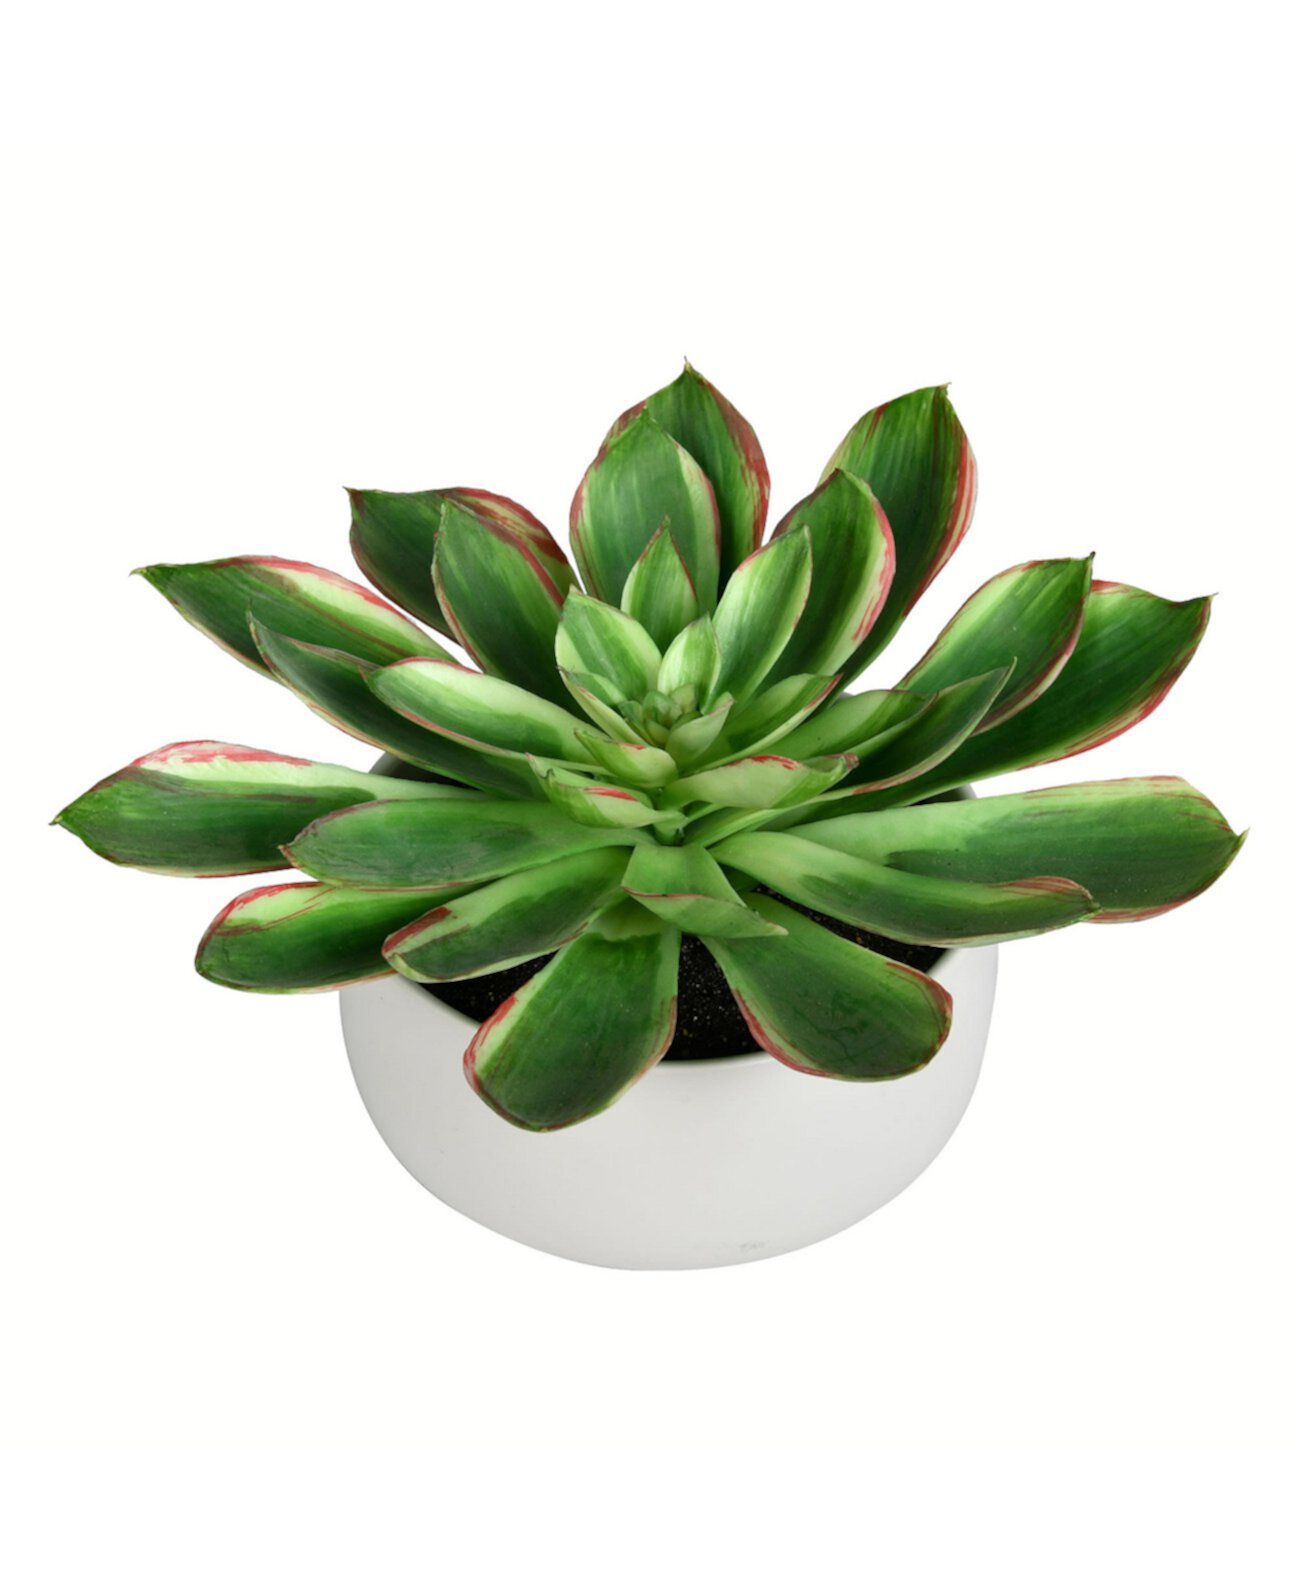 10" Artificial Potted Green Succulent. Vickerman